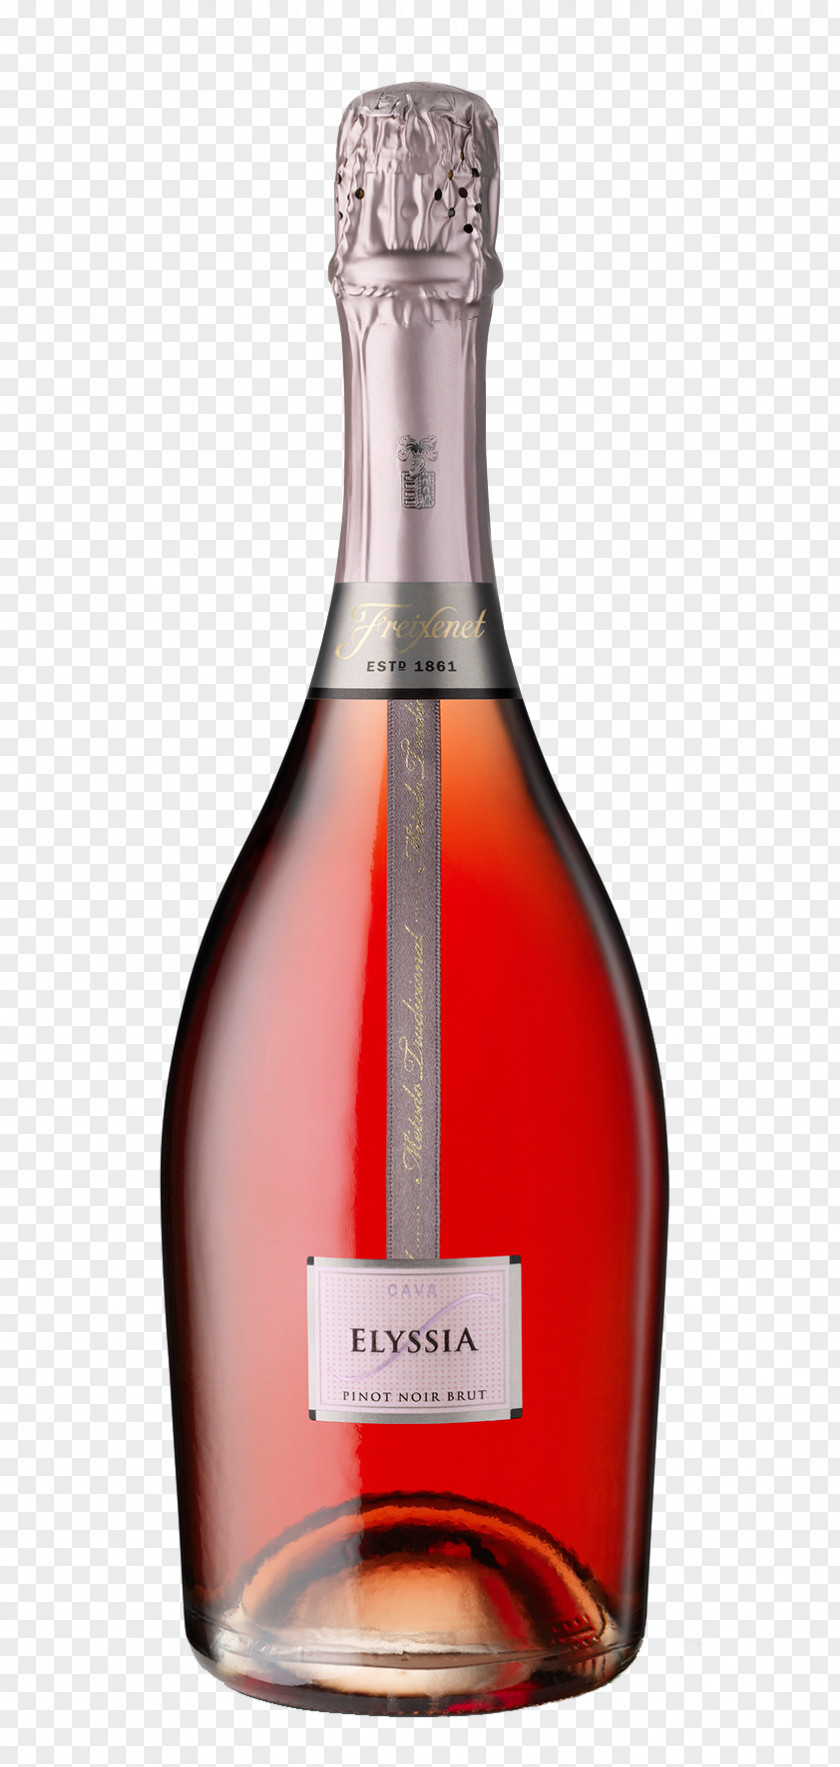 Rose Freixenet Cava DO Pinot Noir Rosé Sparkling Wine PNG